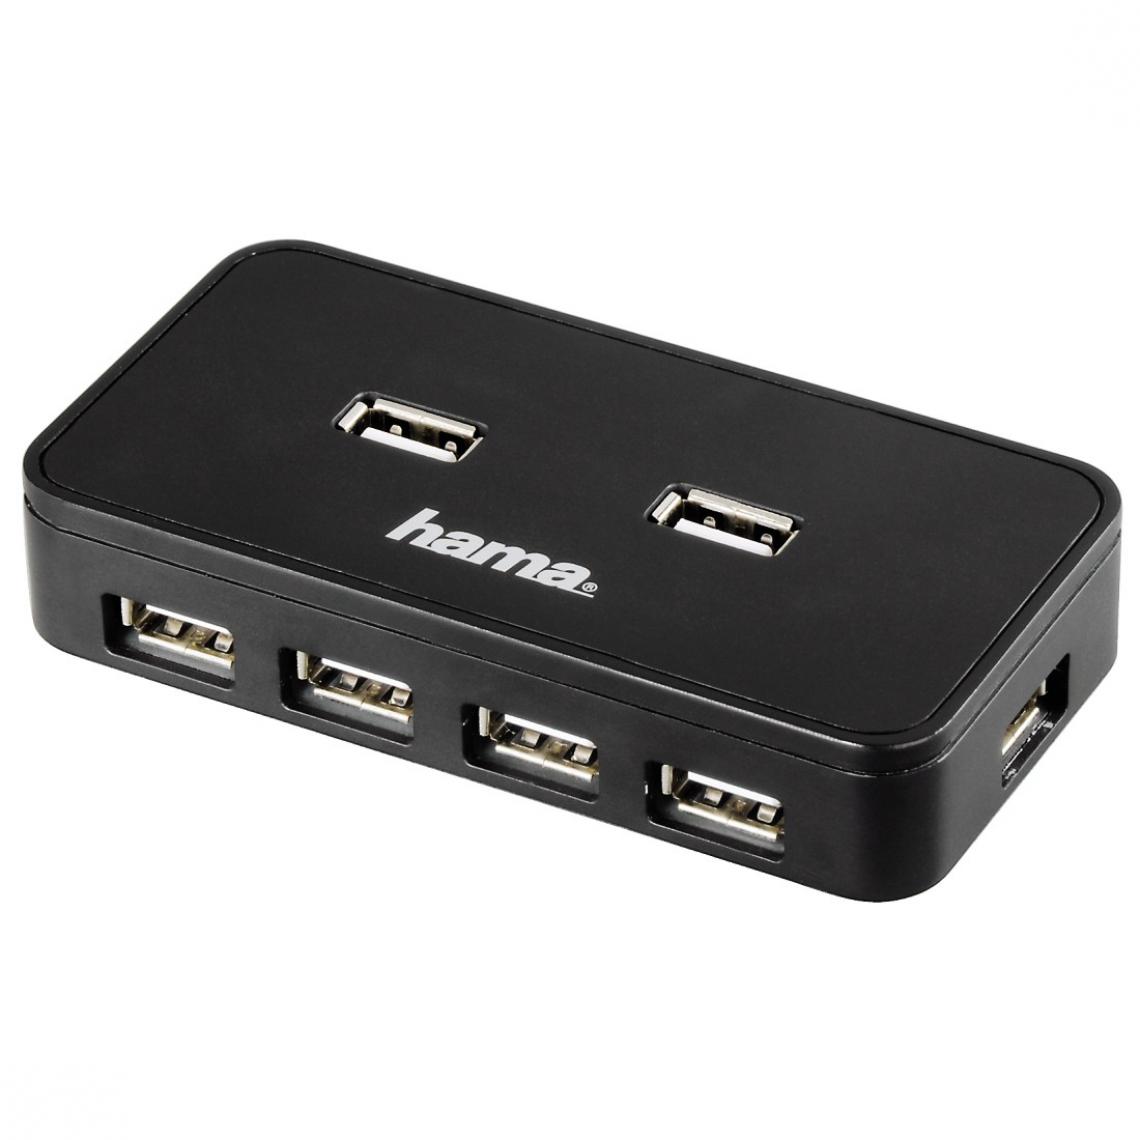 Hama - Hub USB 2.0, 7 ports, avec alimentation secteur, Noir - Hub